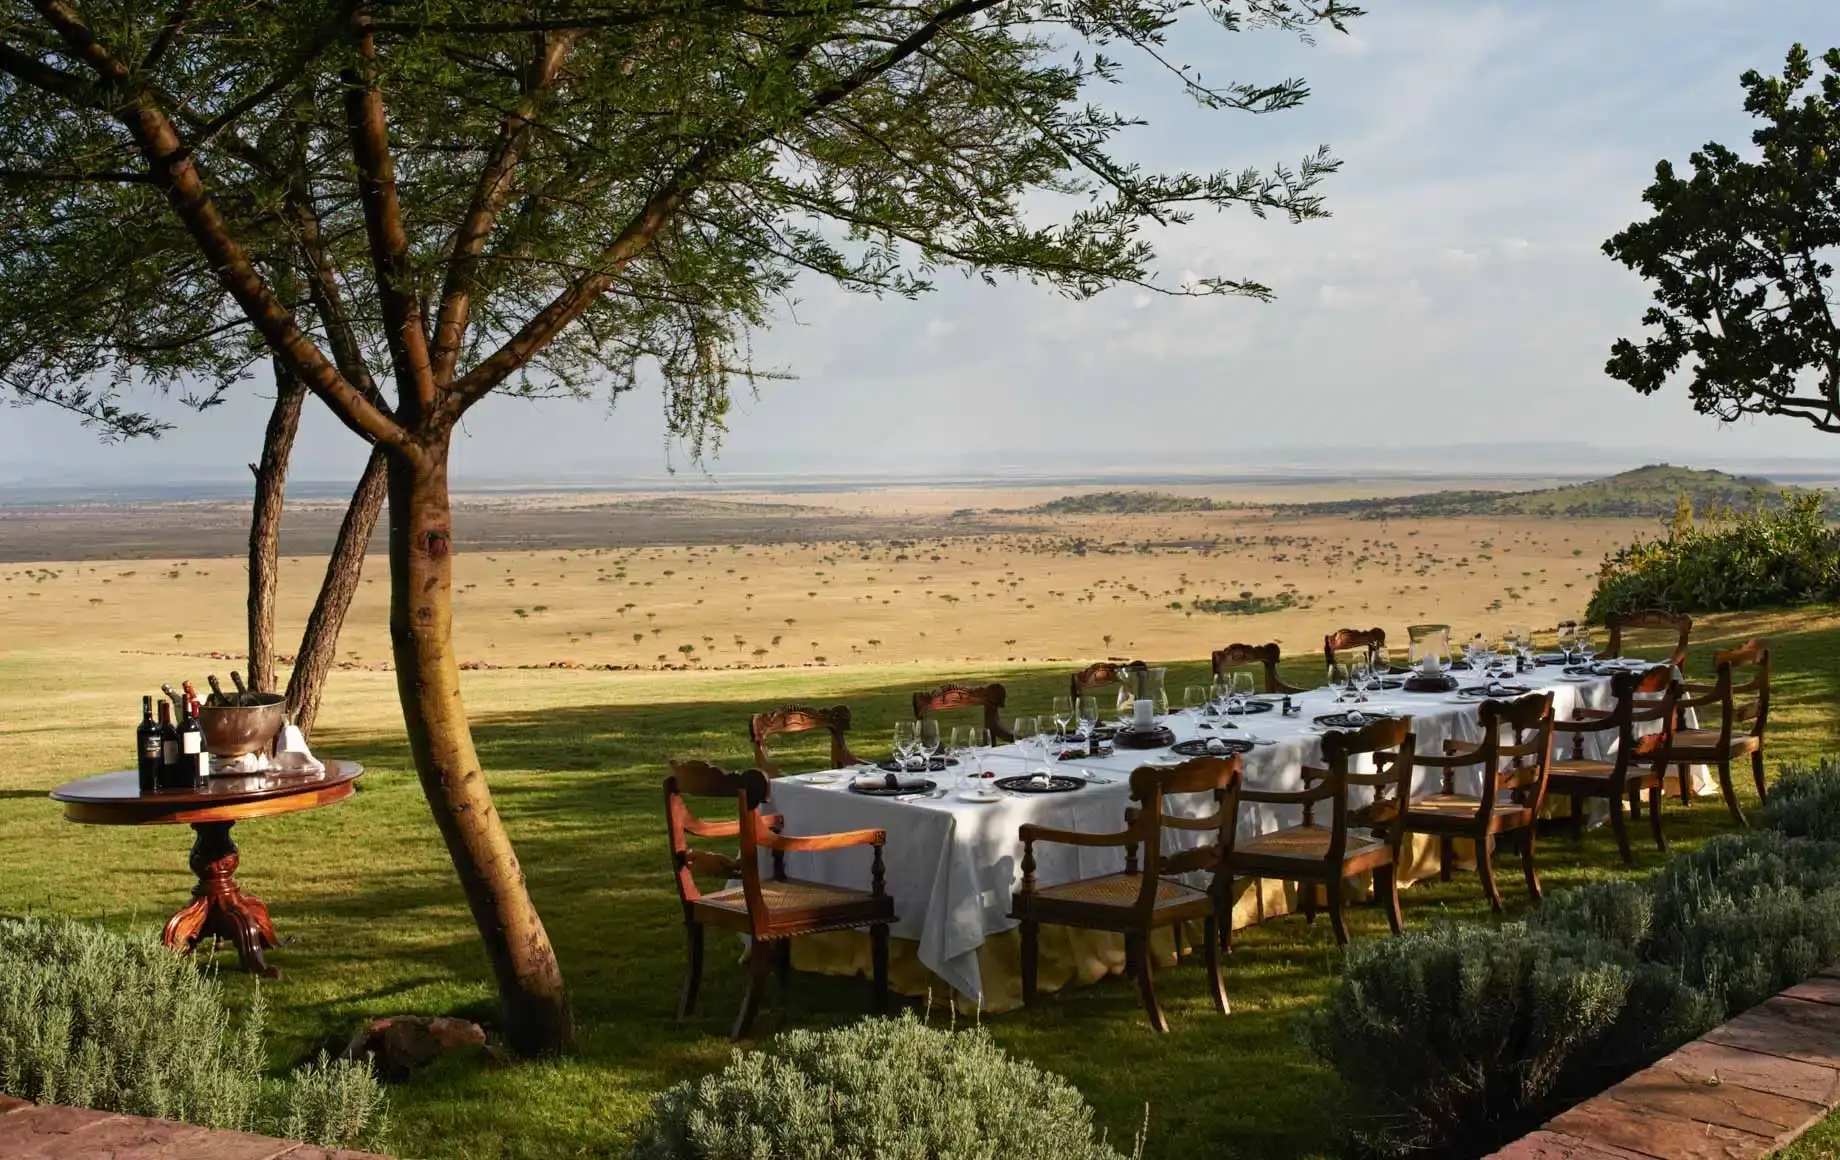 Staying at Exclusive Reserves on luxury safari tours Tanzania